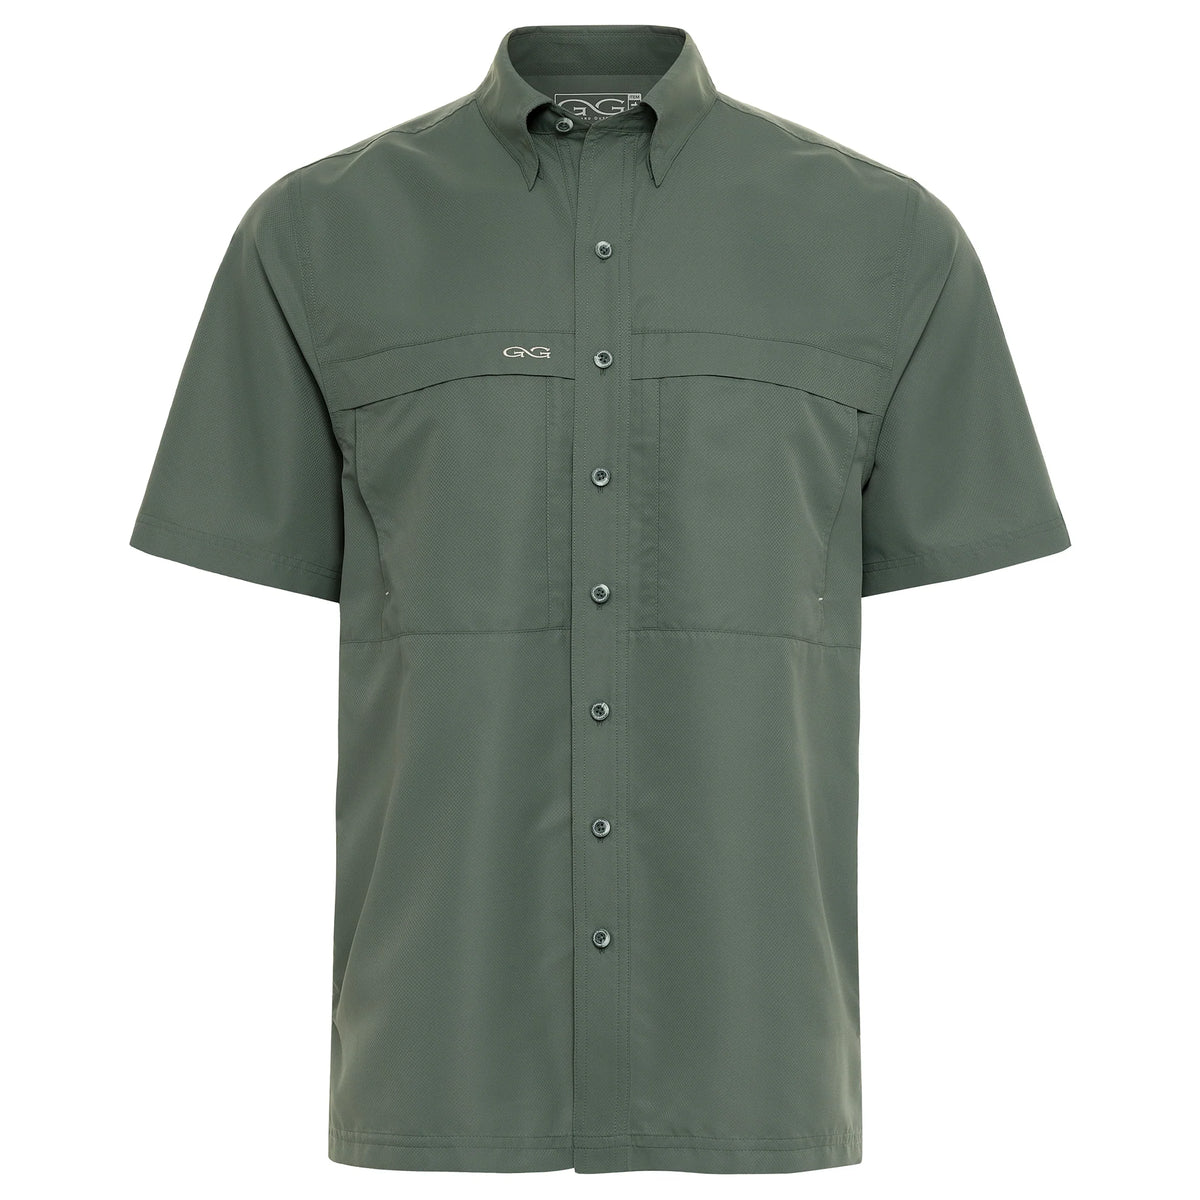 Men's Game Guard Ironwood Short Sleeve Shirt